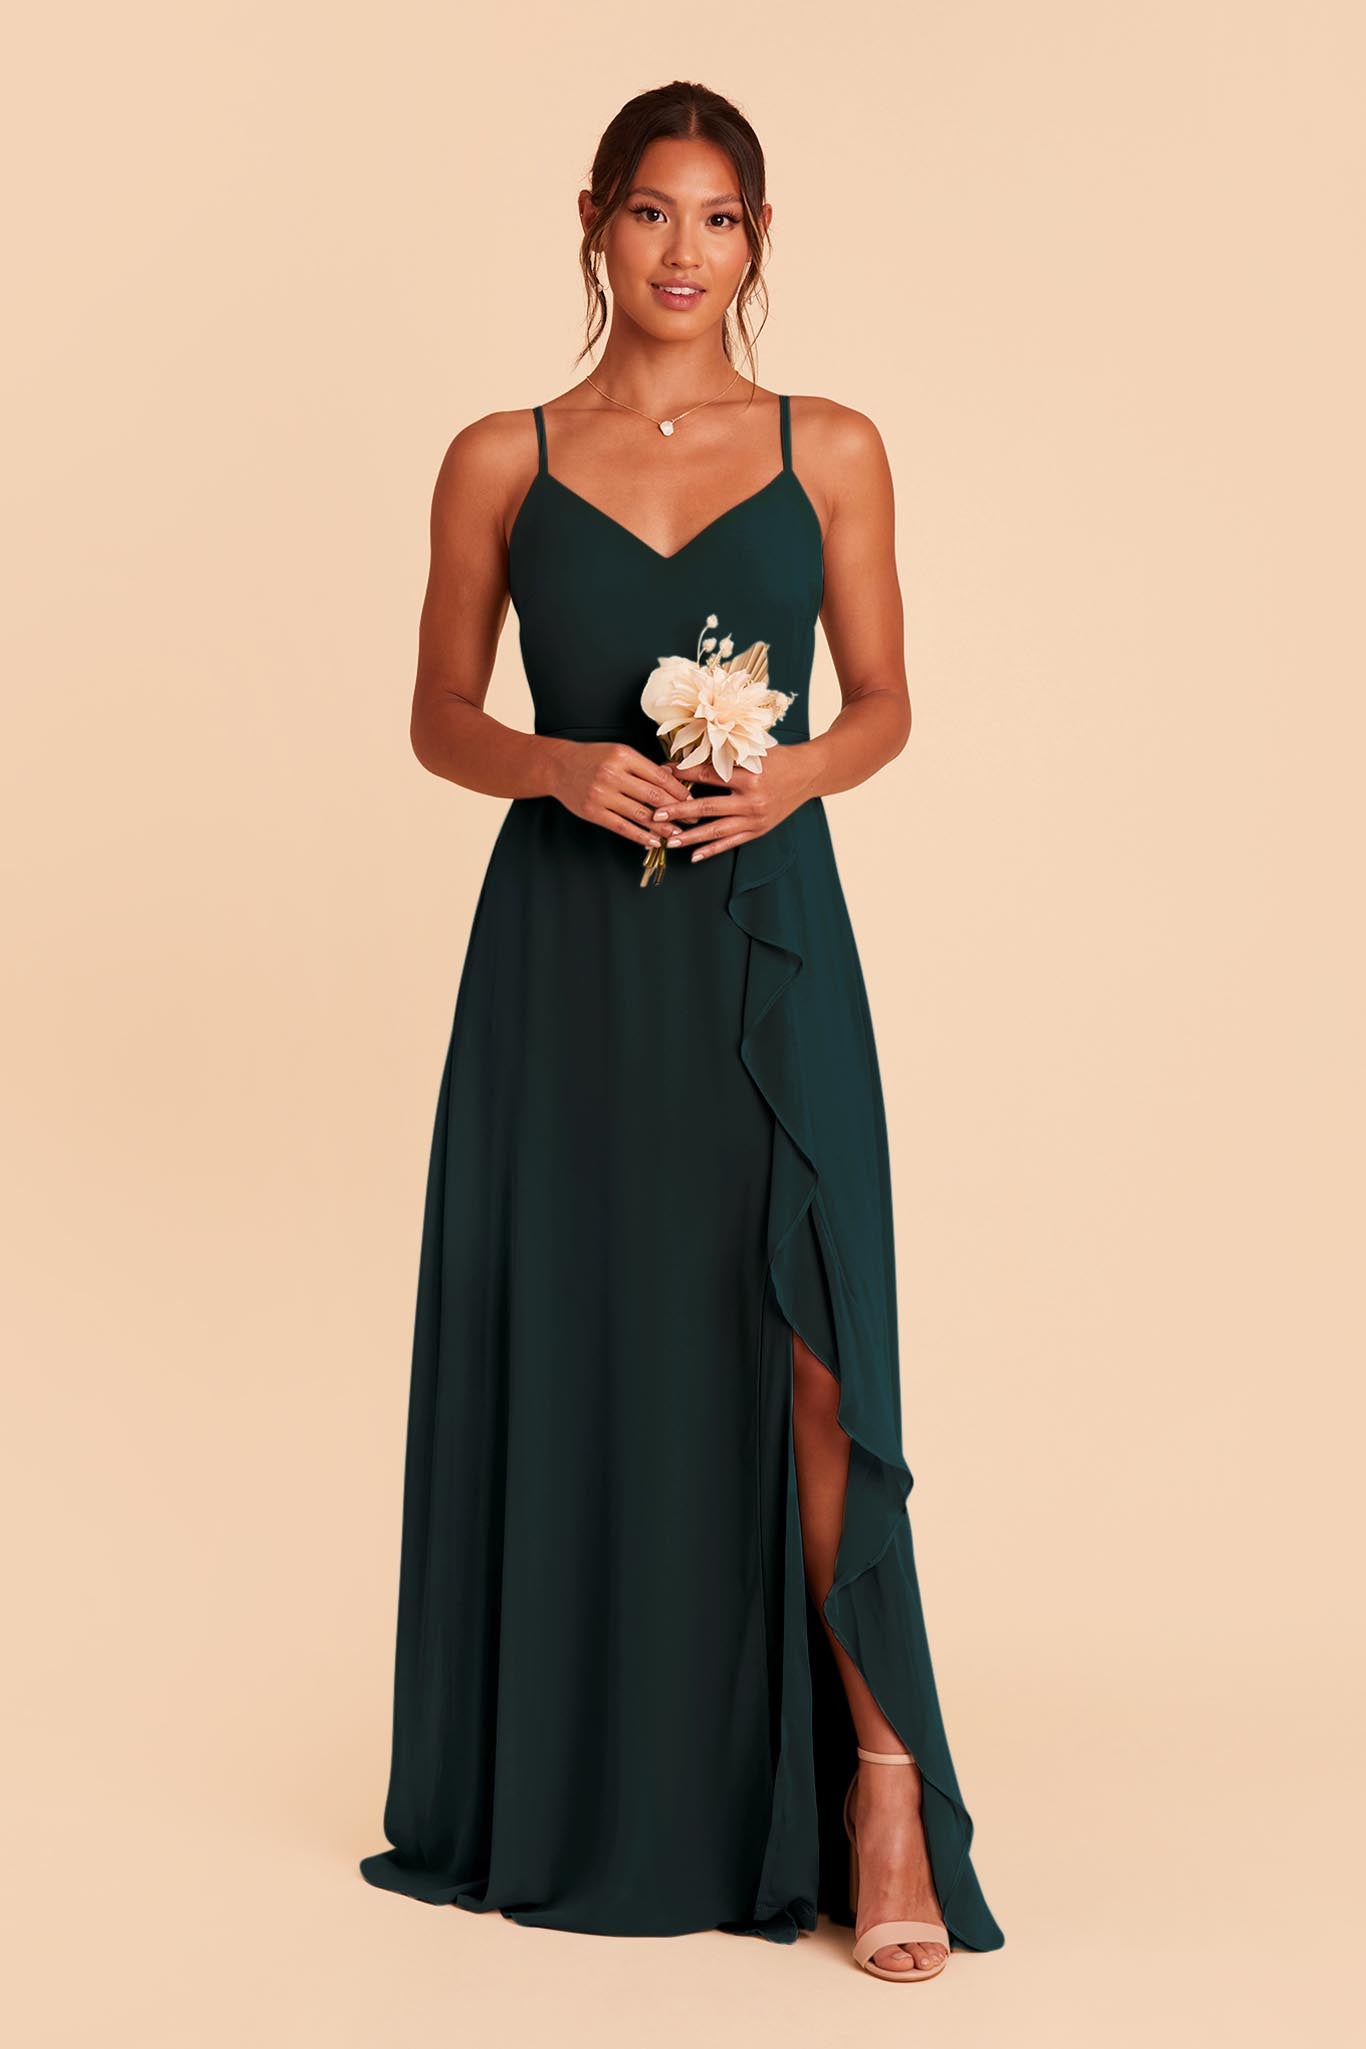 Emerald Theresa Chiffon Dress by Birdy Grey